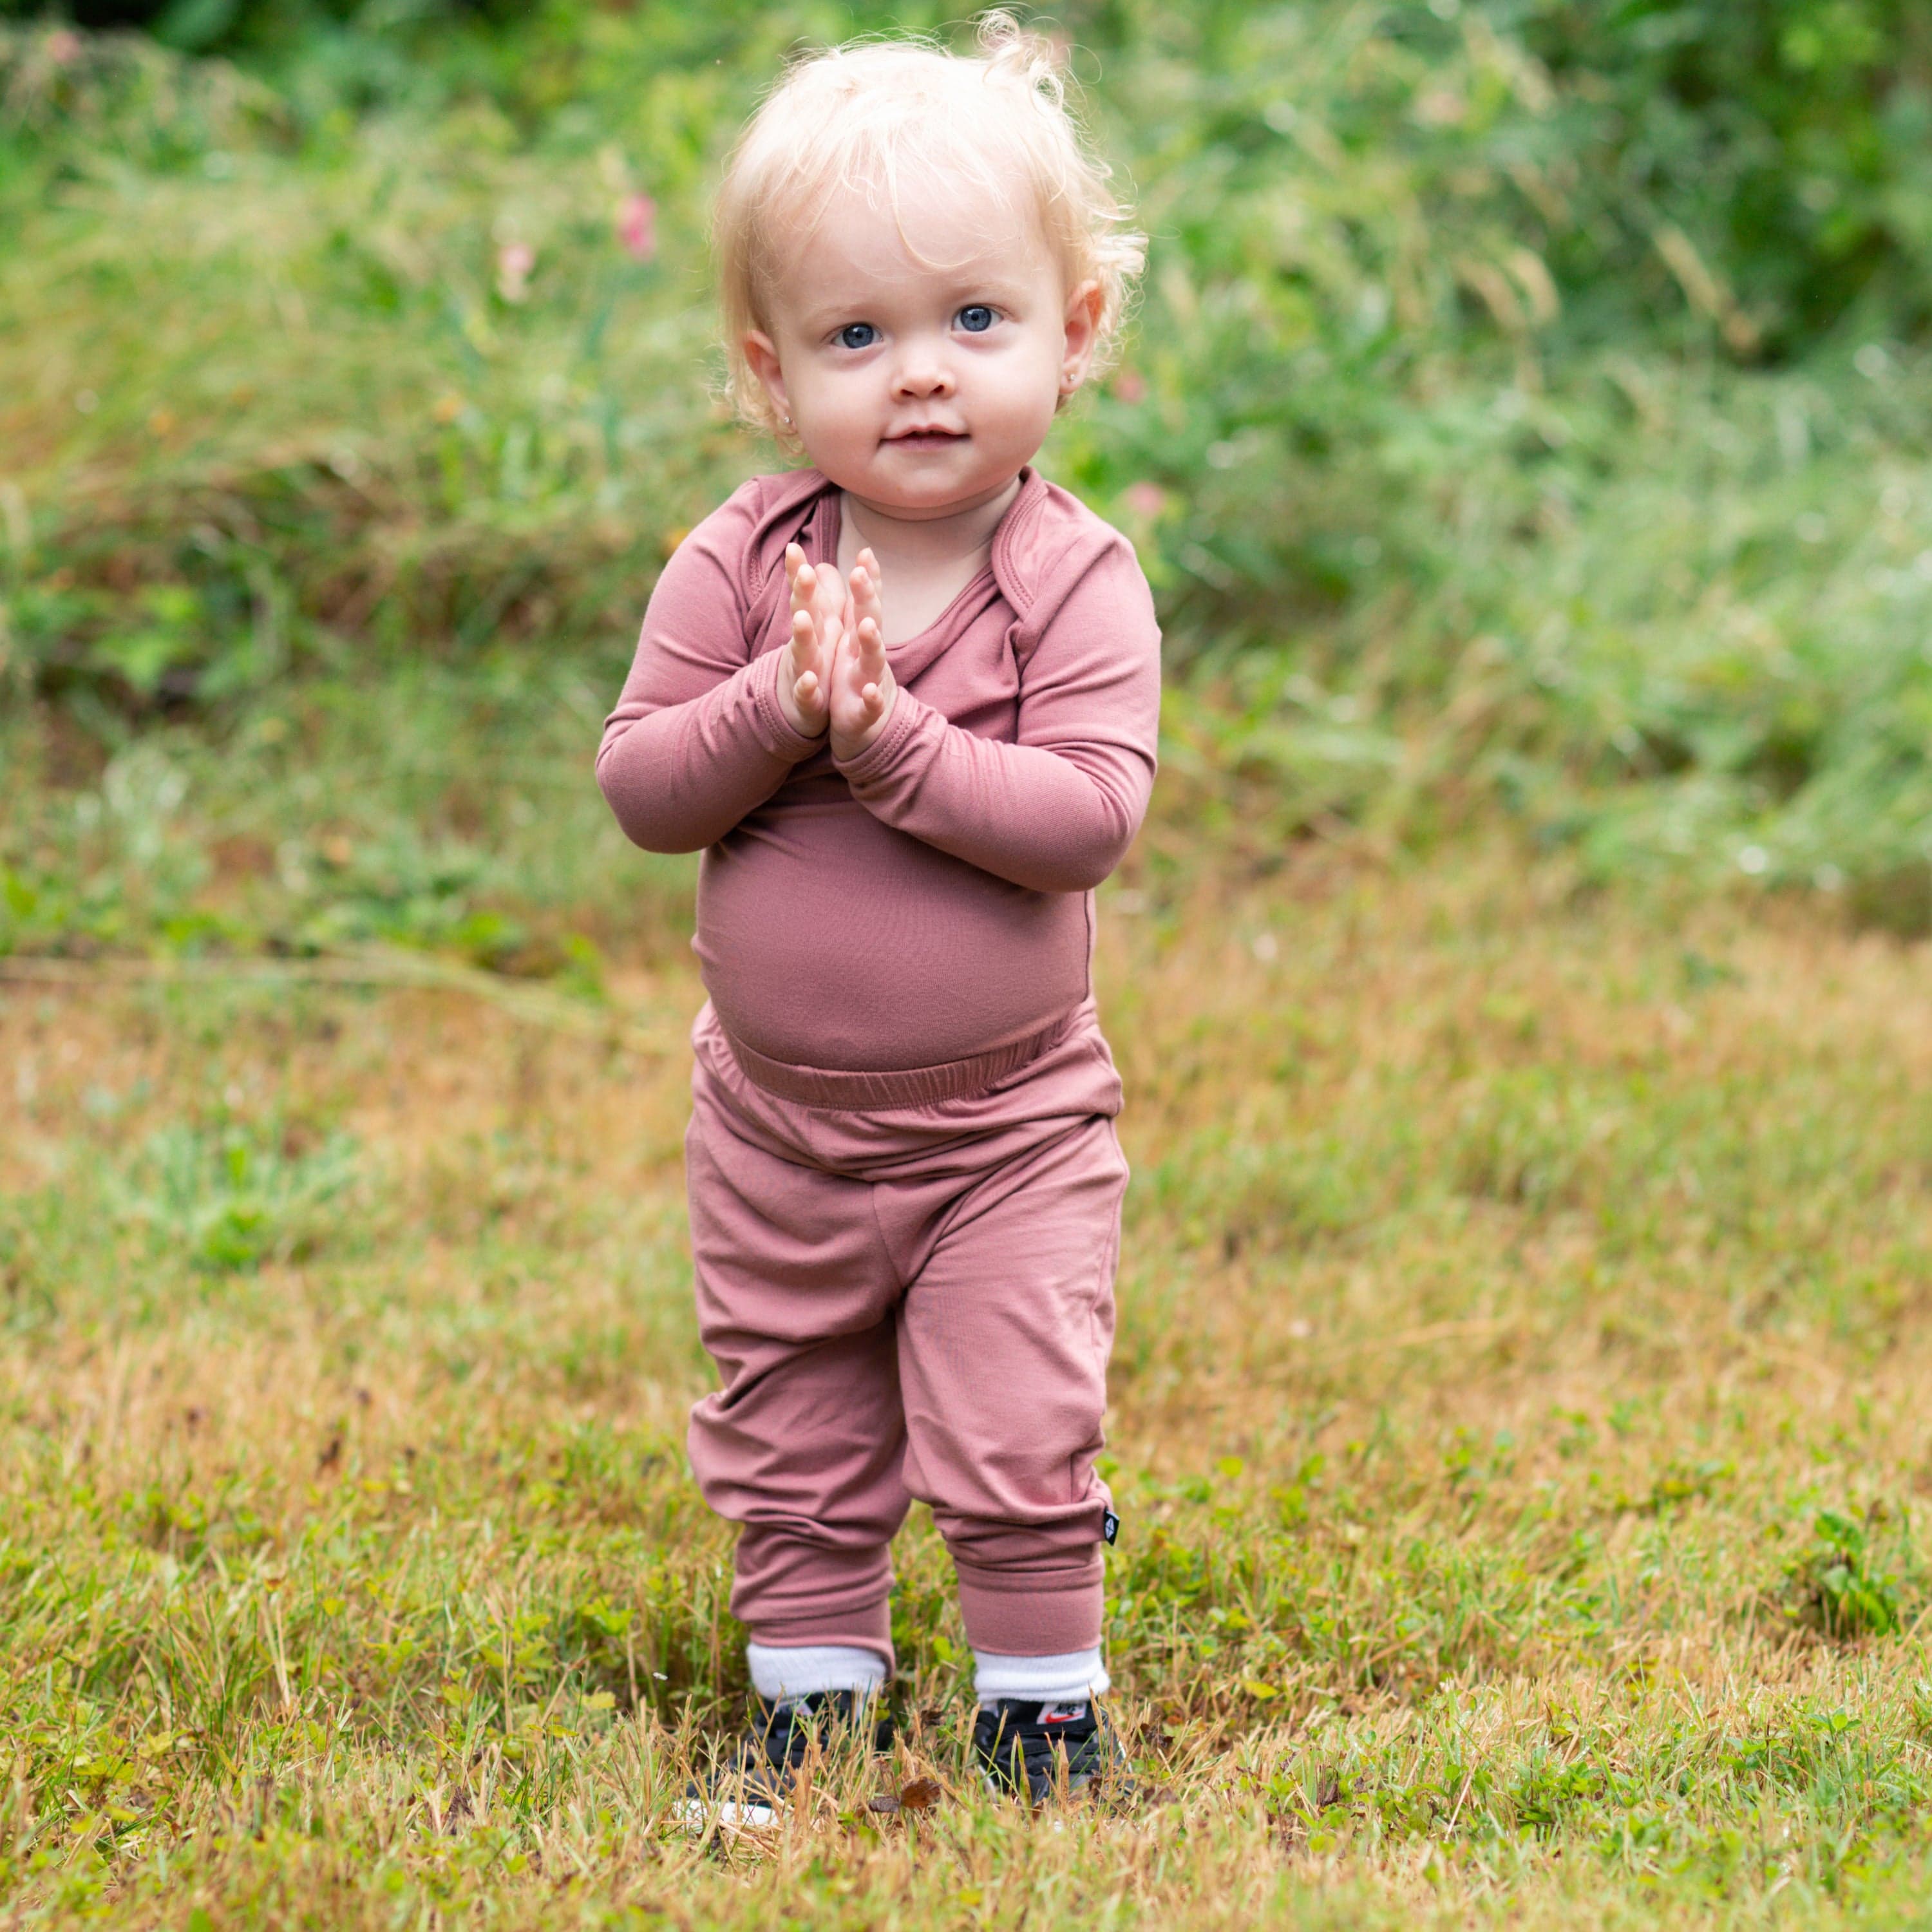 Baby Long Sleeve Thermal Bodysuit - Pink